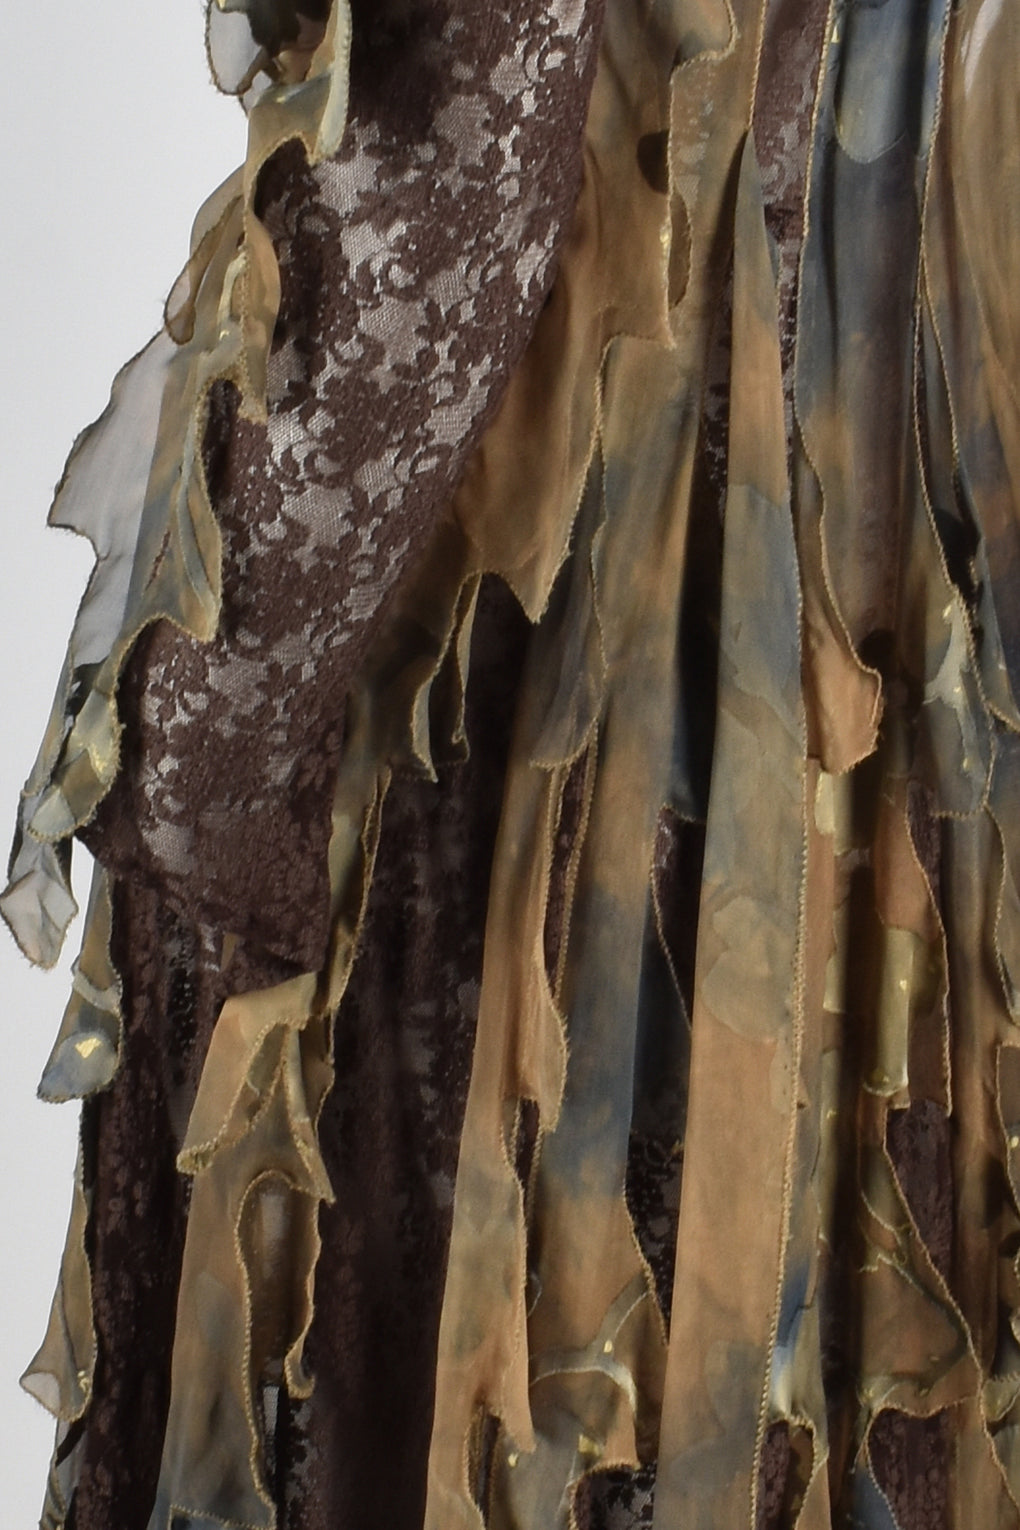 VINTAGE 1990s camouflage lace chiffon dress L-XL